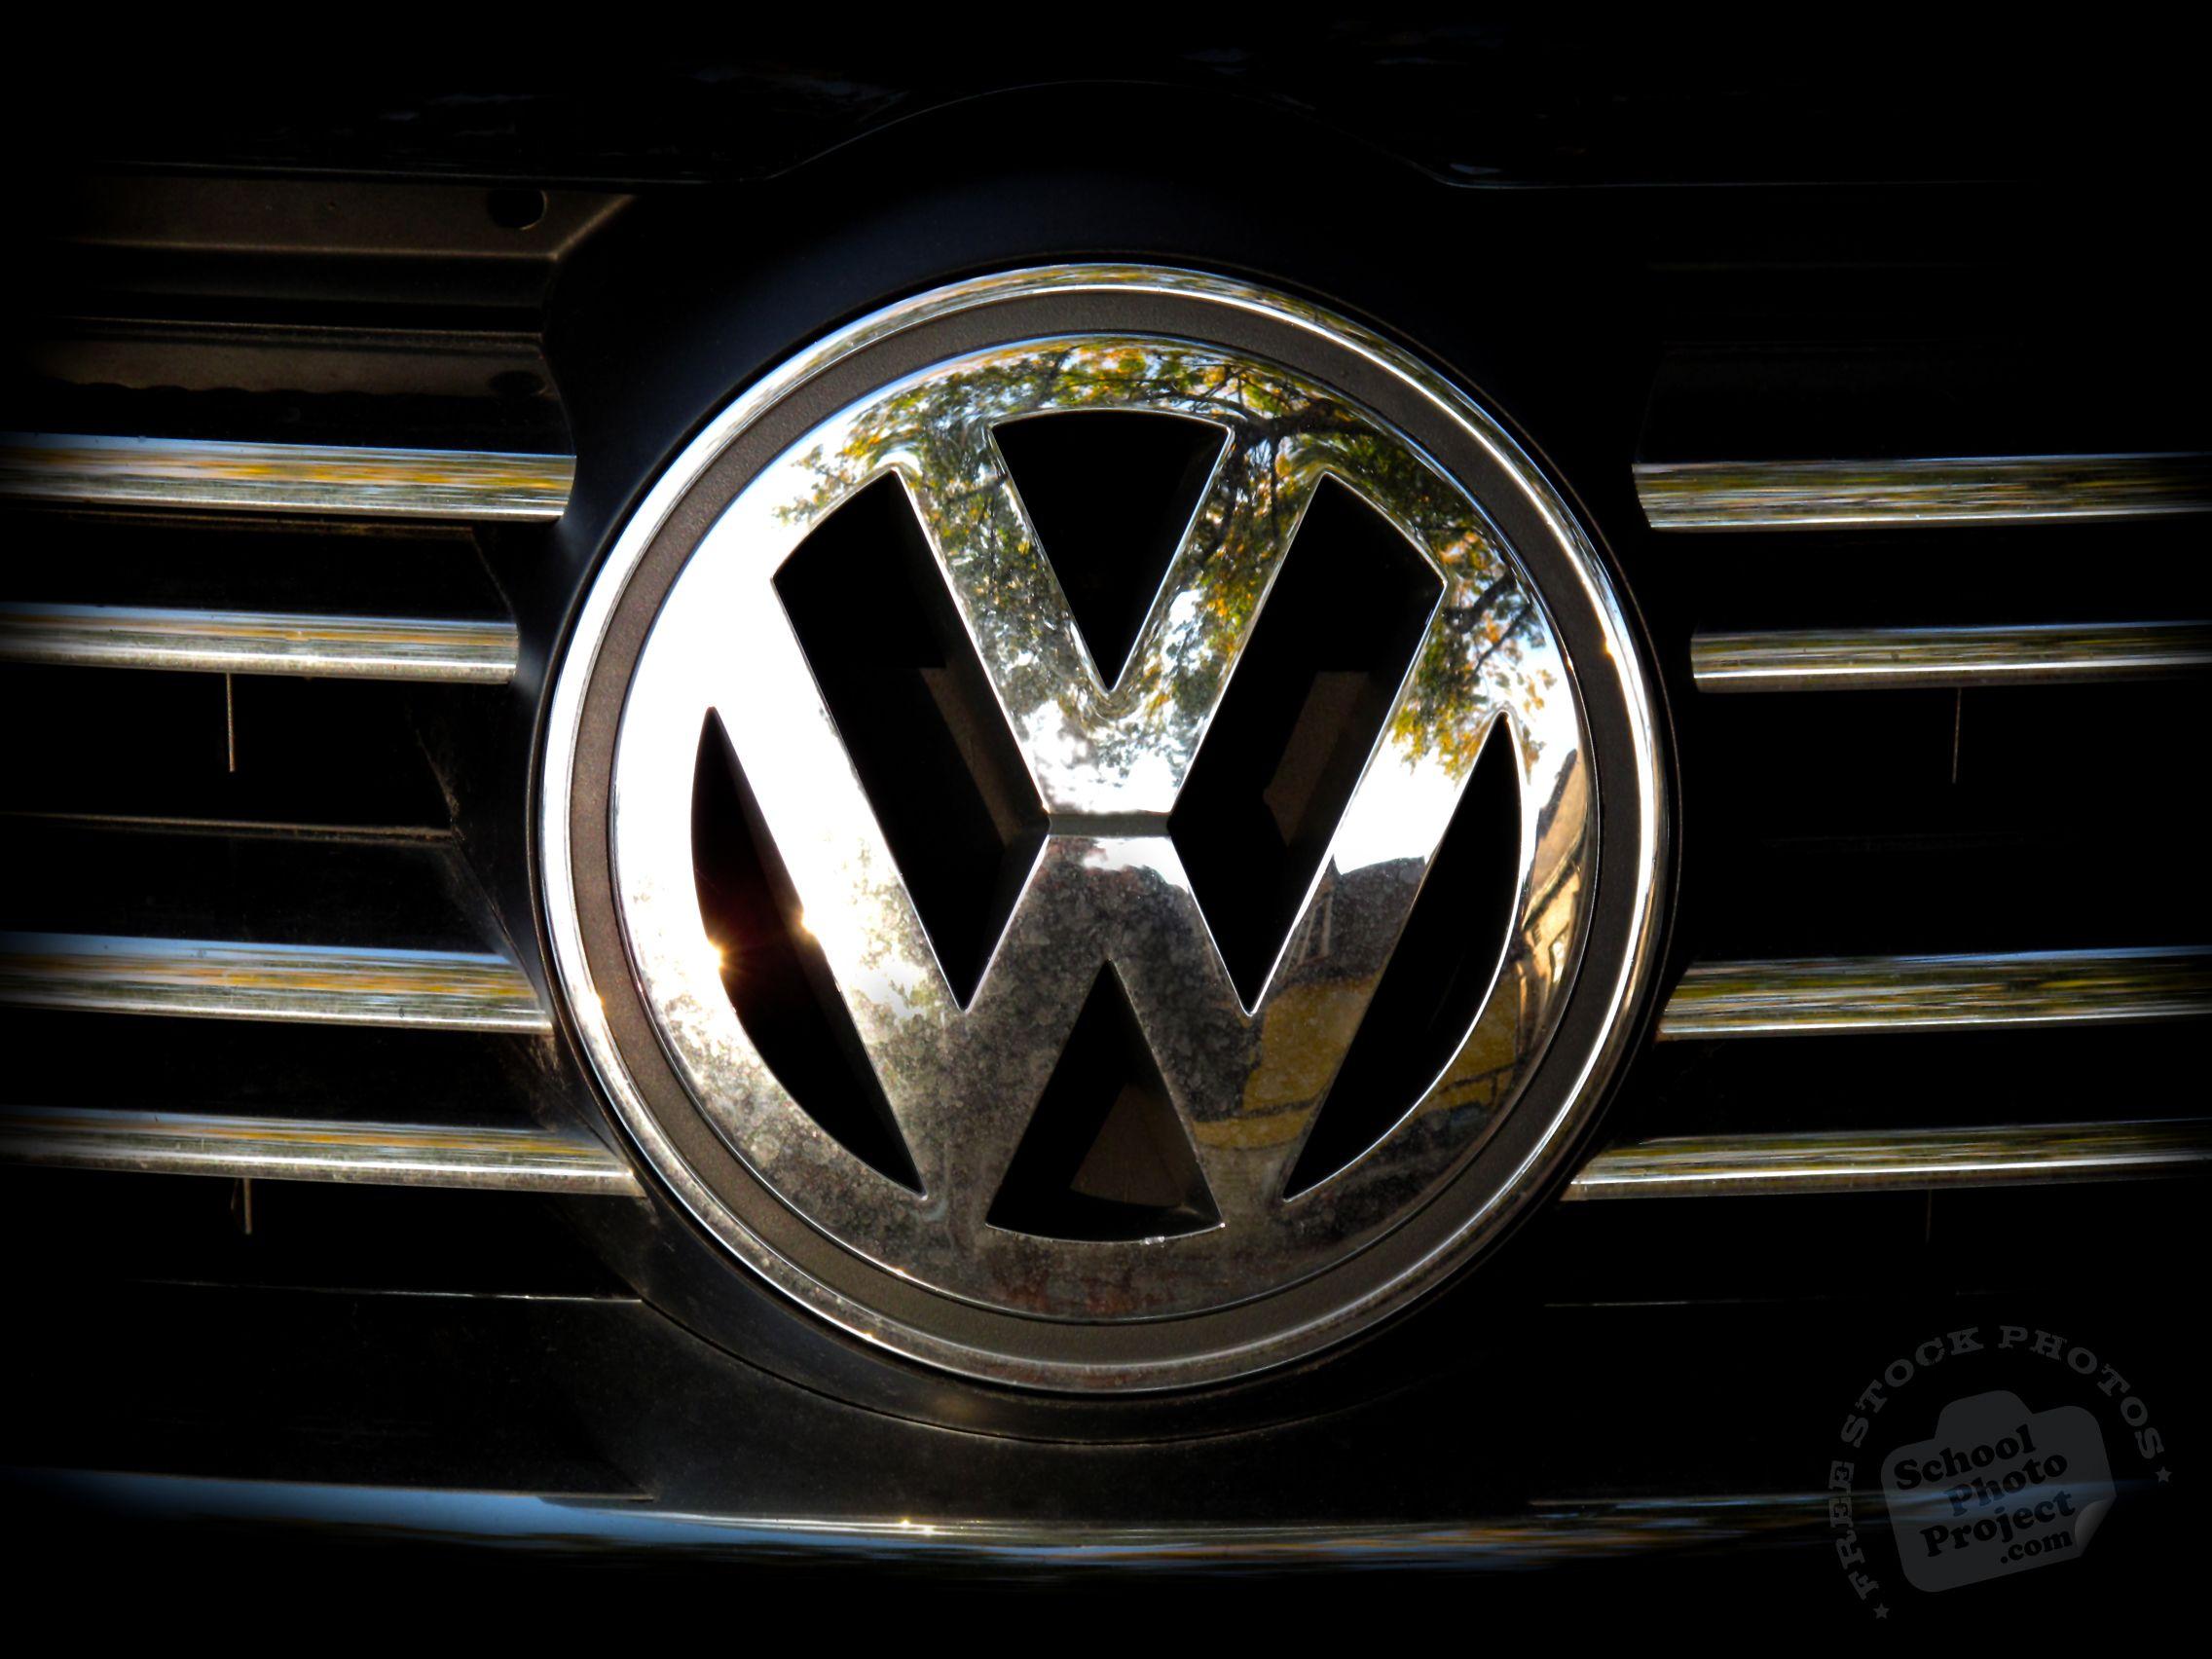 VW Car Logo - VW Logo, FREE Stock Photo, Image, Picture: Volkswagen Logo Brand ...